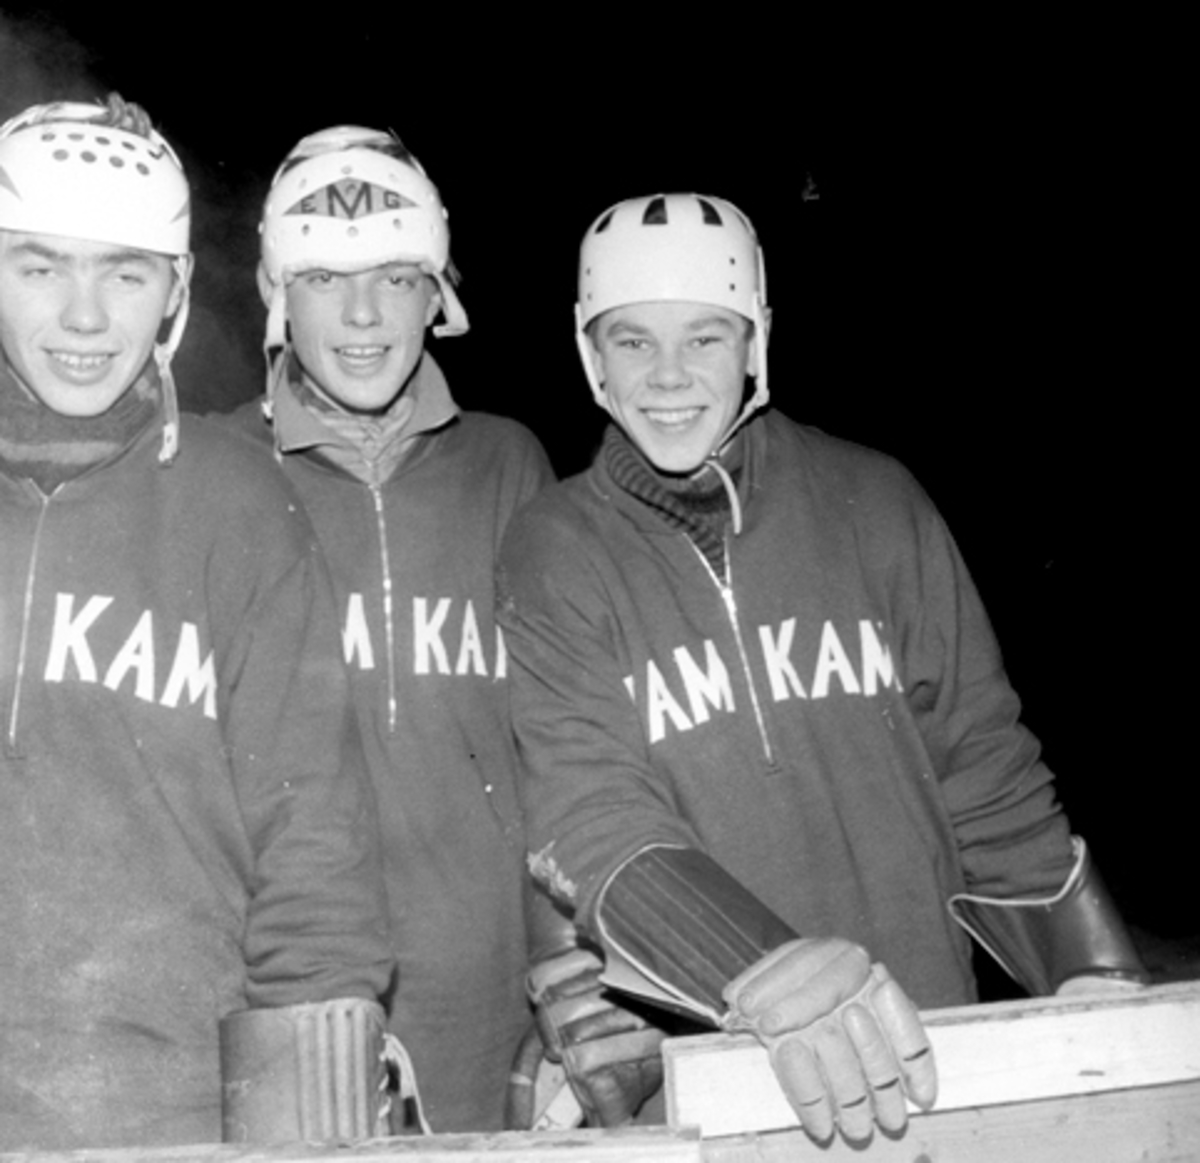 Ishockey, Ham-Kam, gruppe 3 ukjente hockeyspillere.